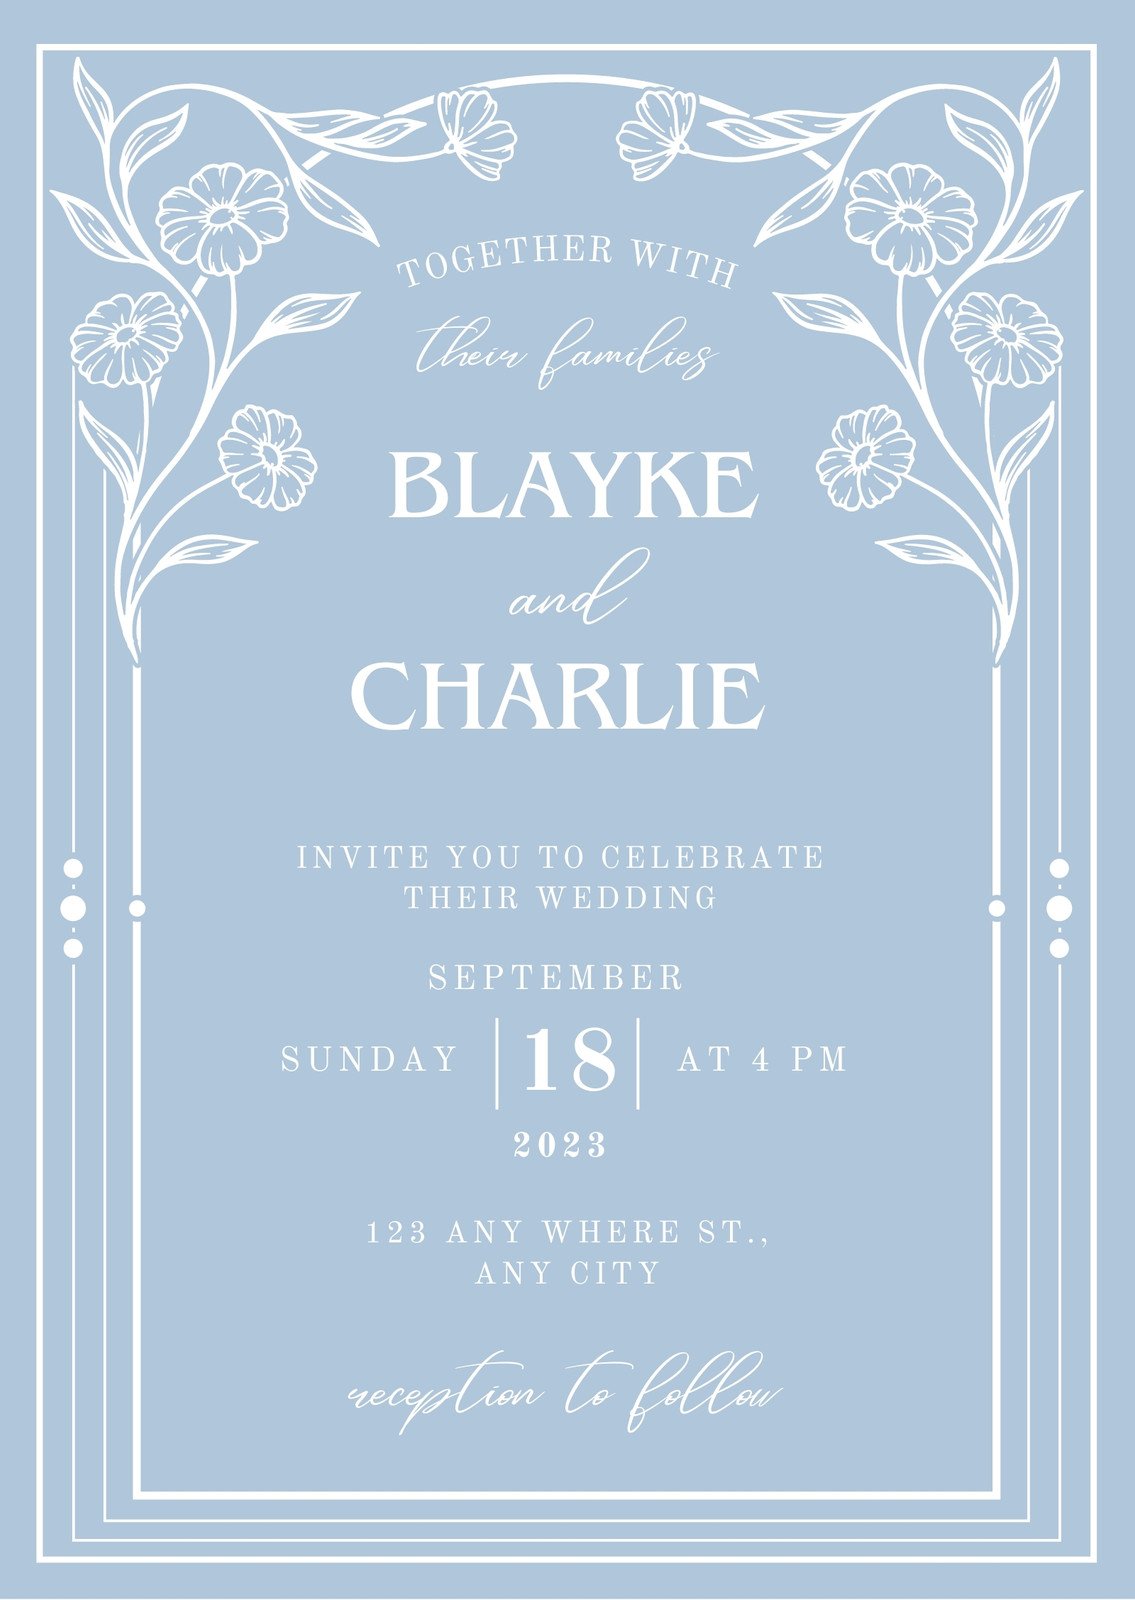 White and Blue Vintage Wedding Invitation